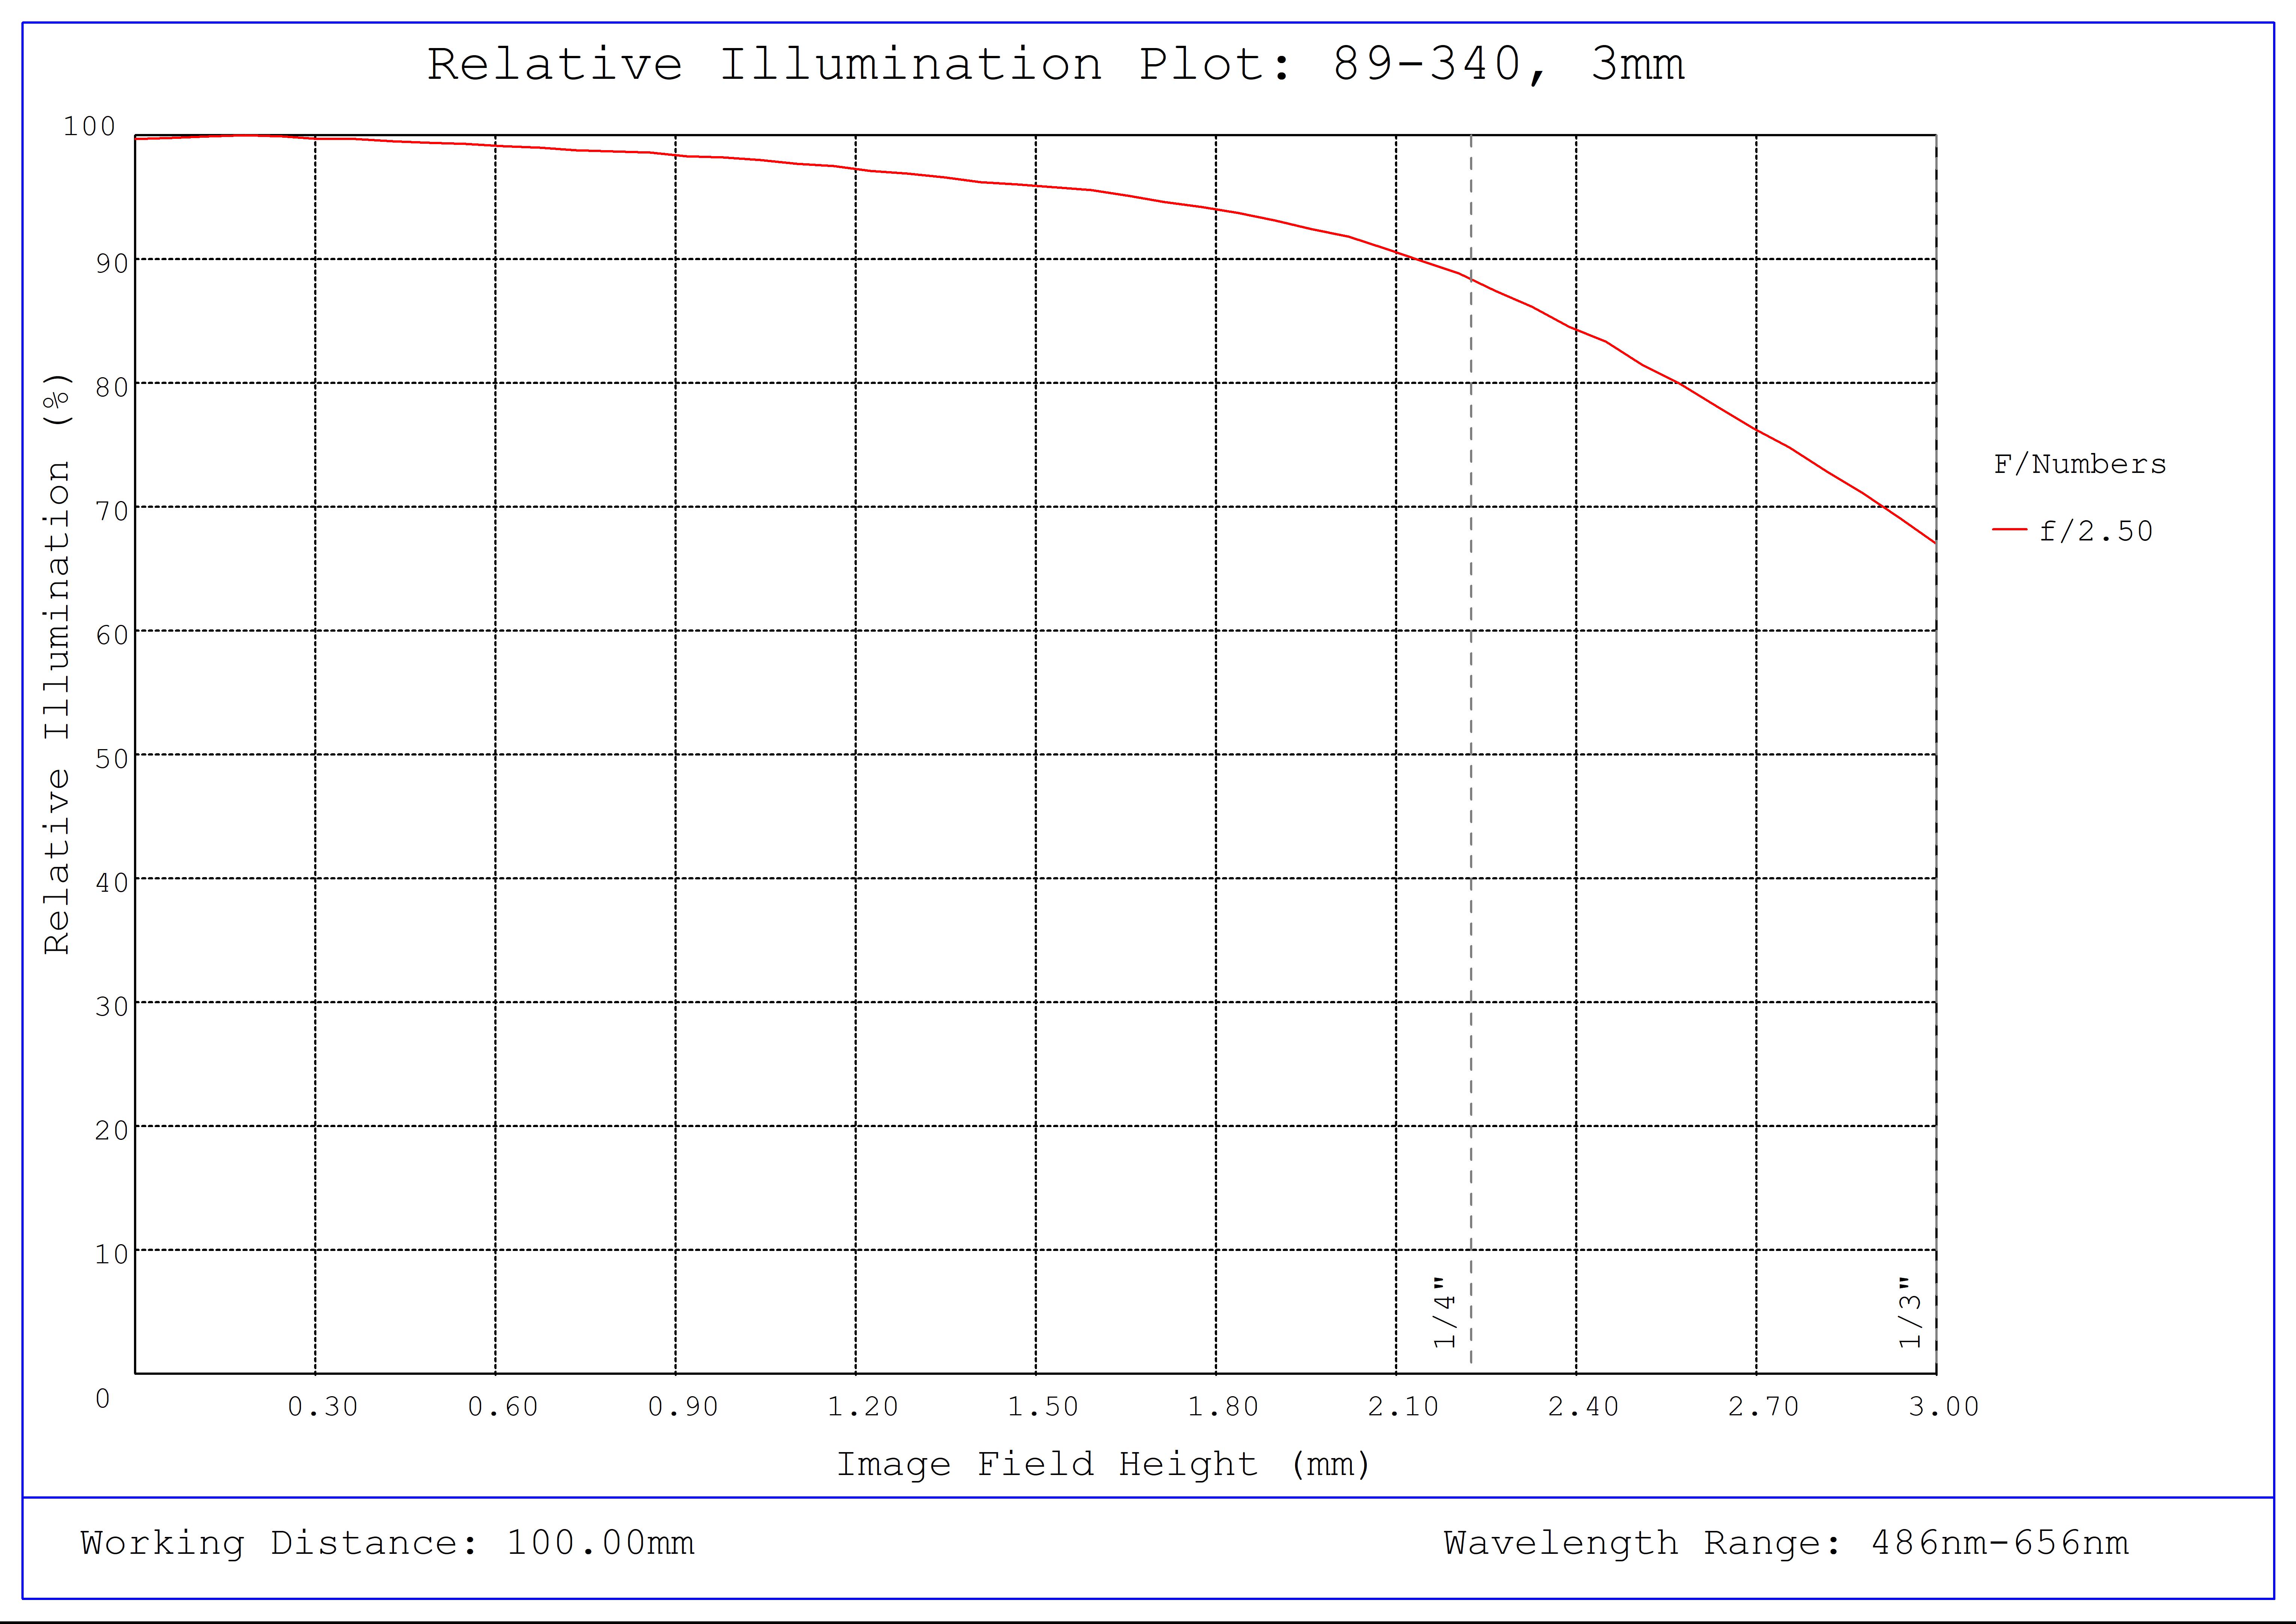 #89-340, 3mm FL f/2.5, Blue Series M12 Lens, Relative Illumination Plot